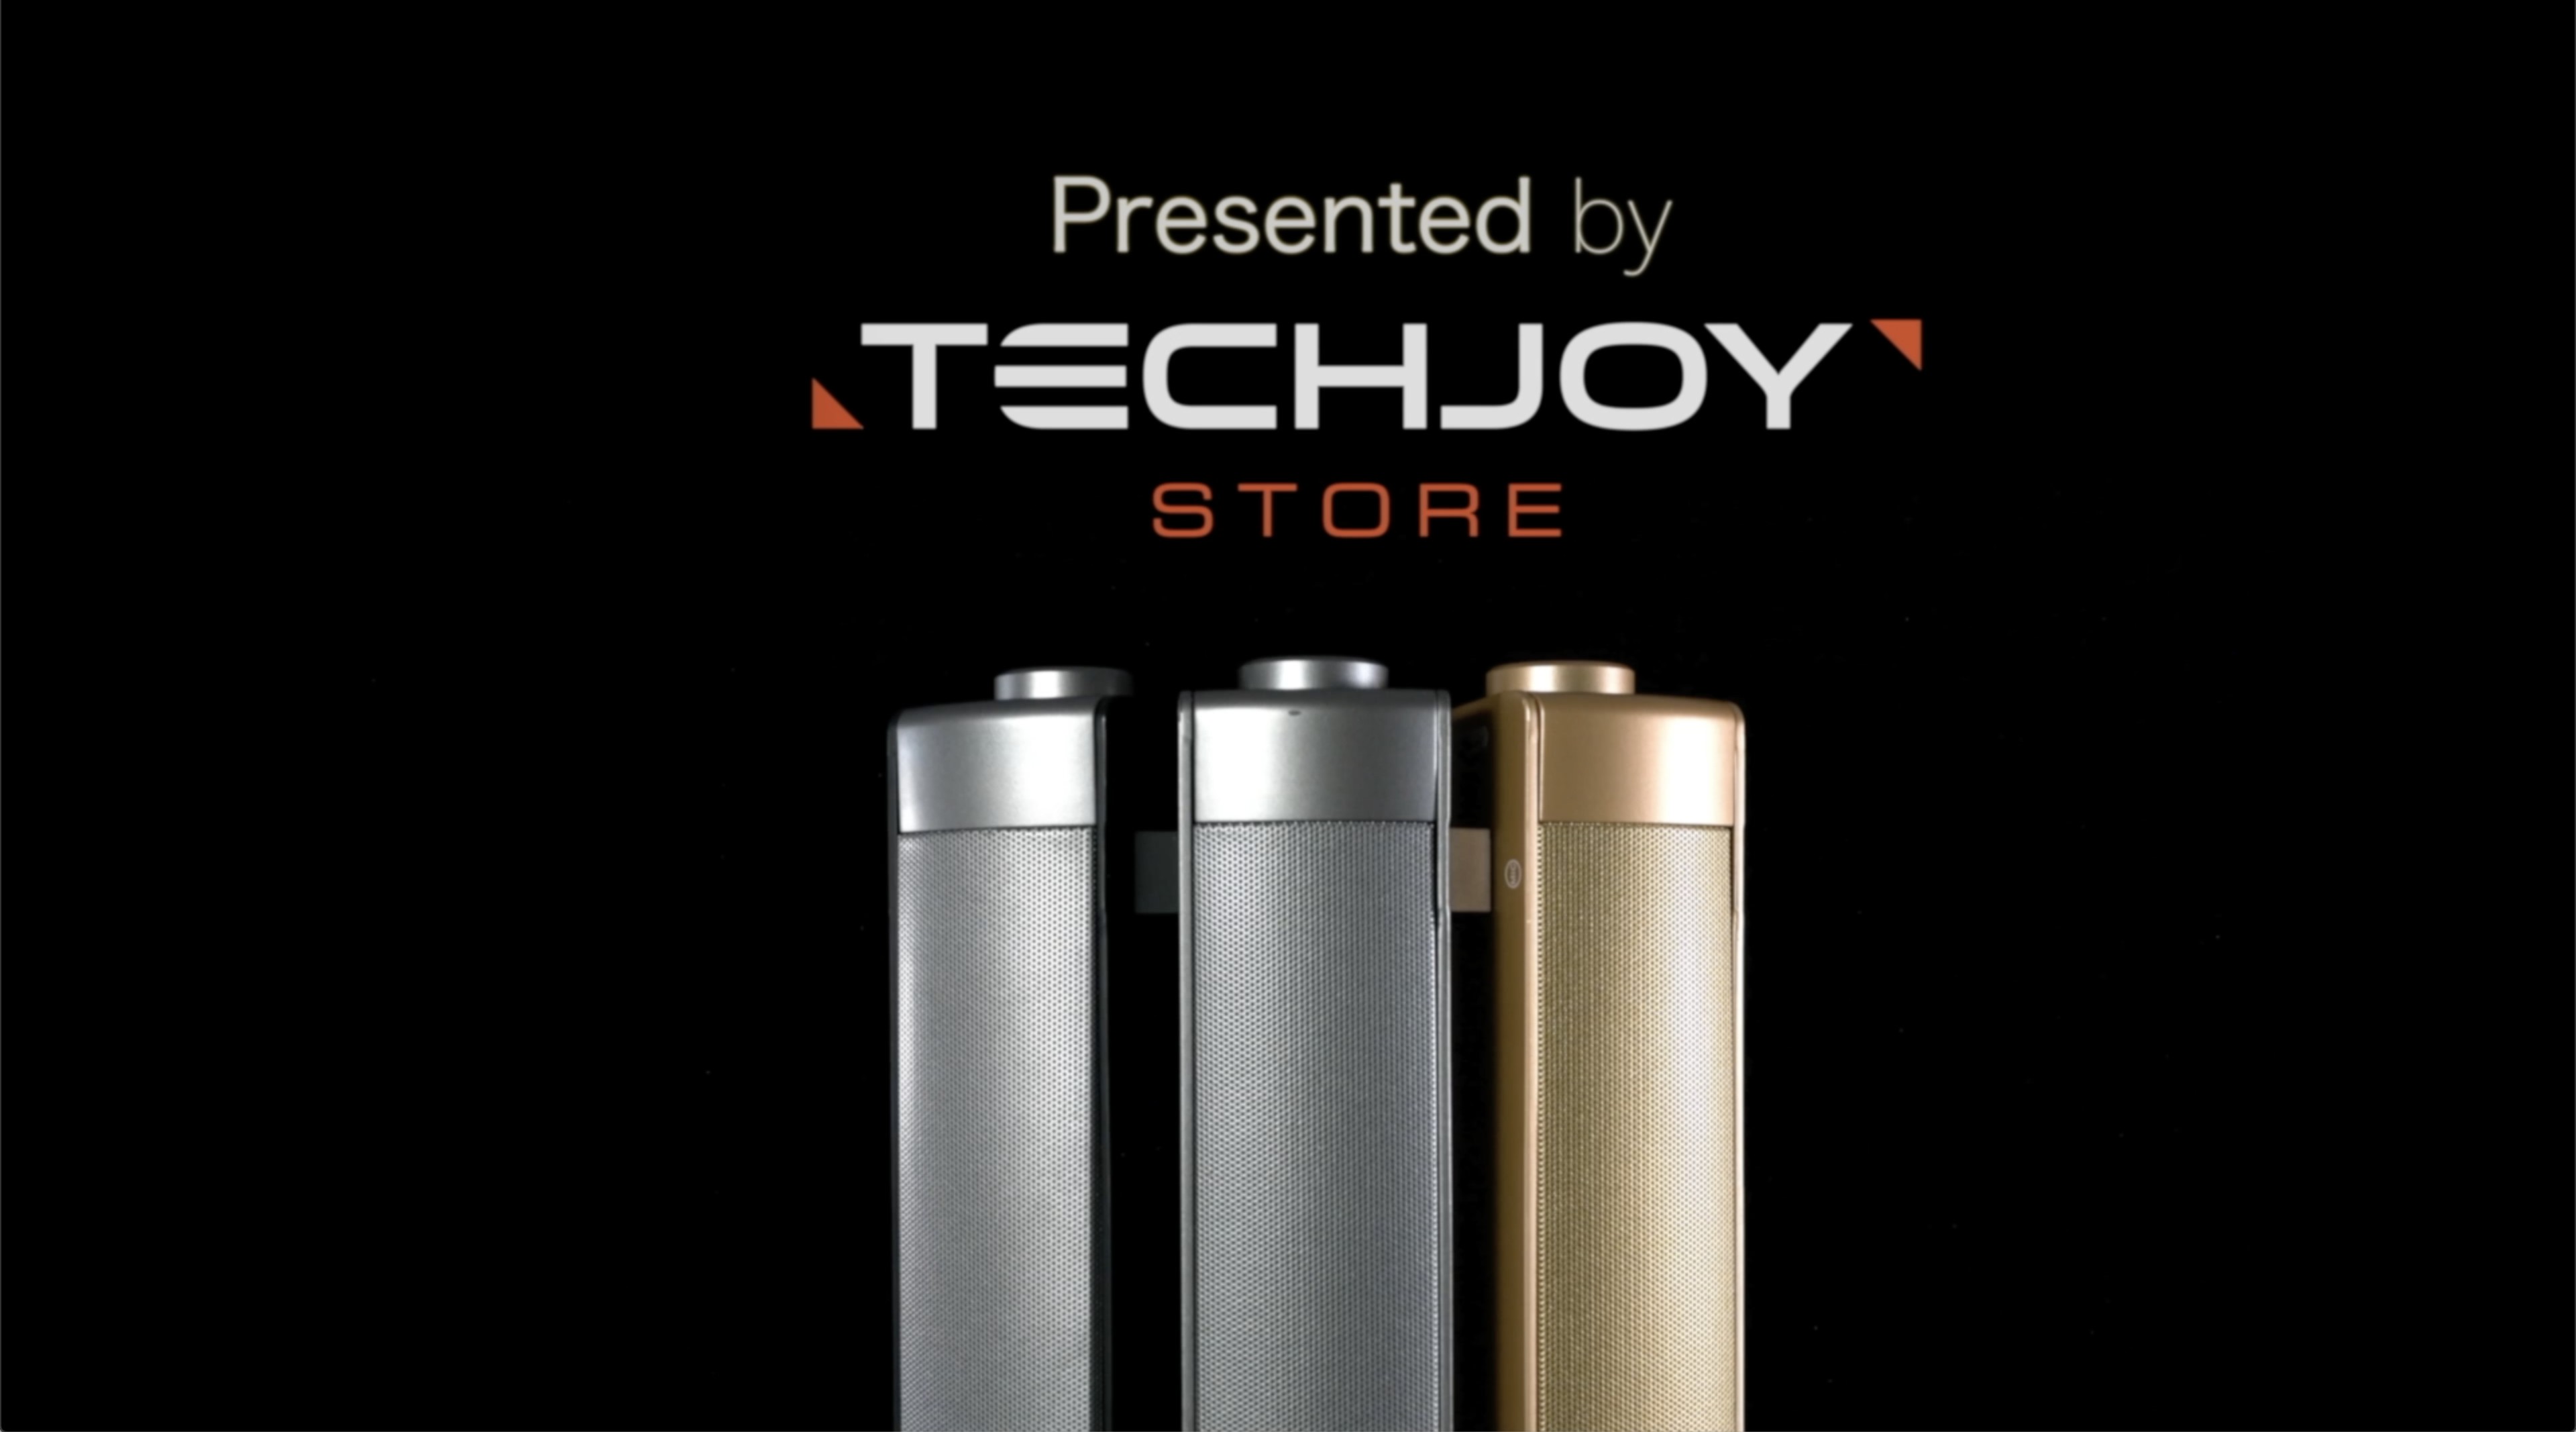 TECHJOY | 条形音箱电商视频 